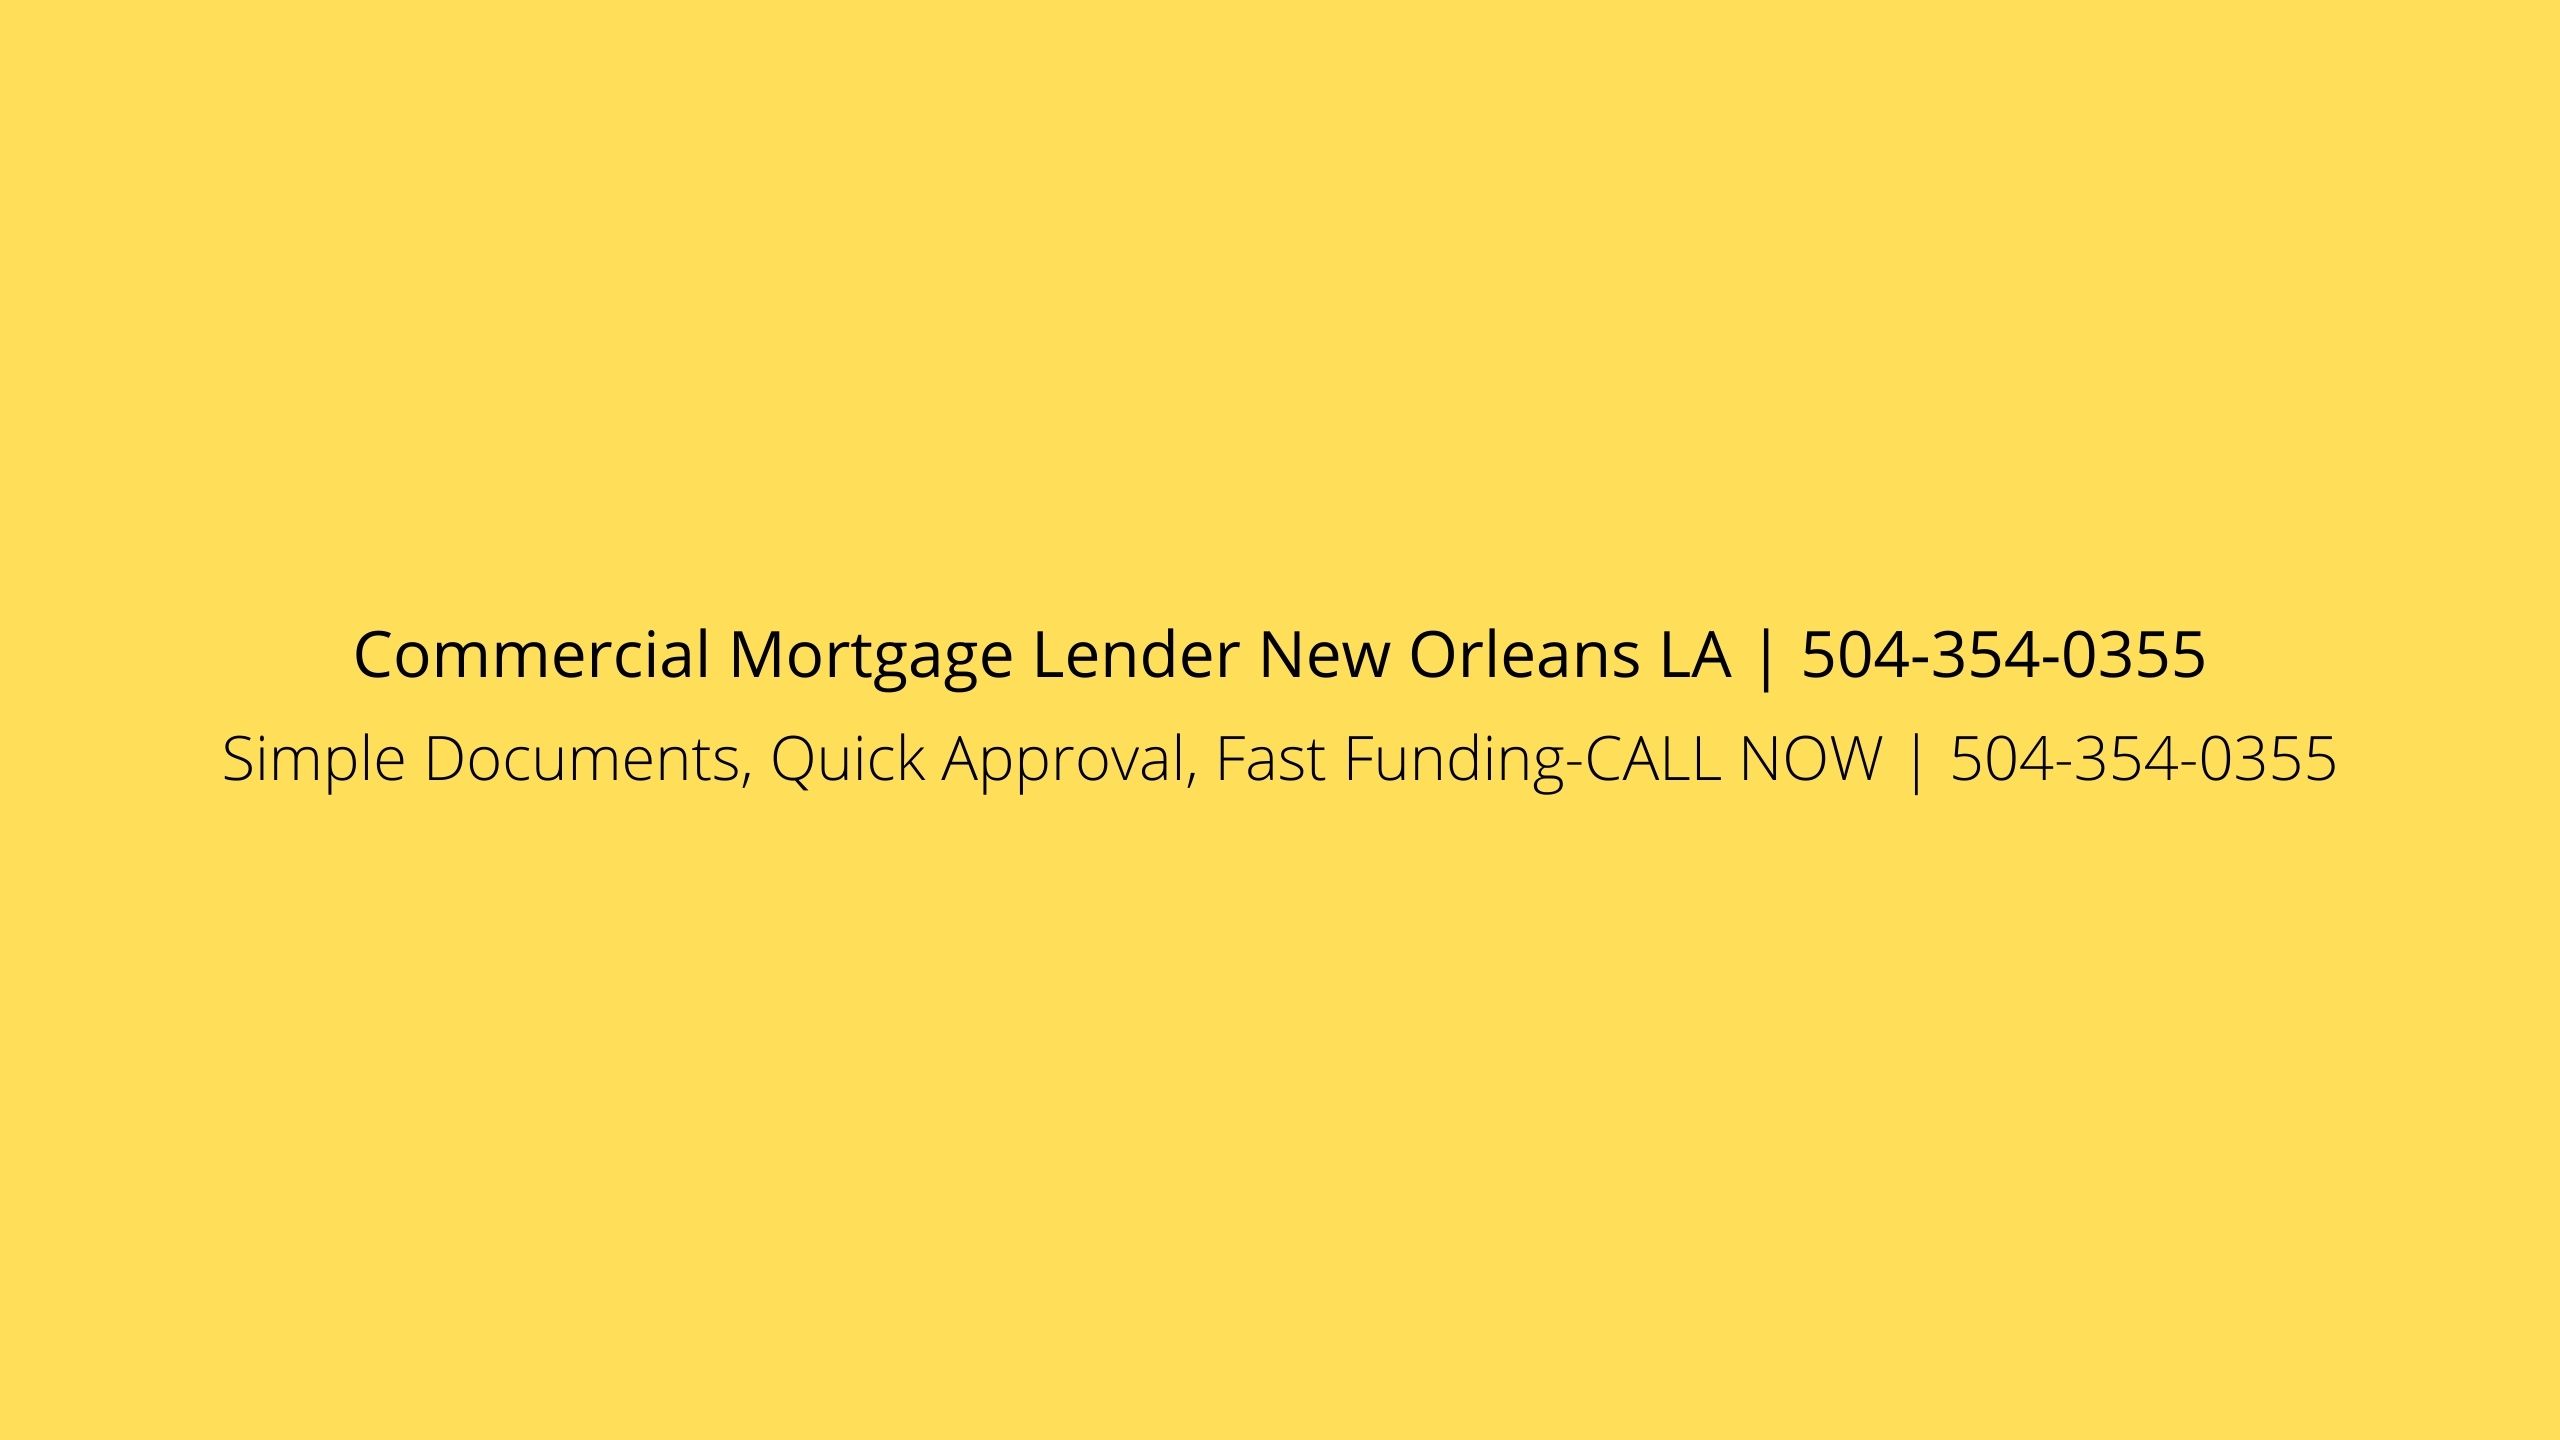 Commercial Mortgage Lender New Orleans LA's Logo